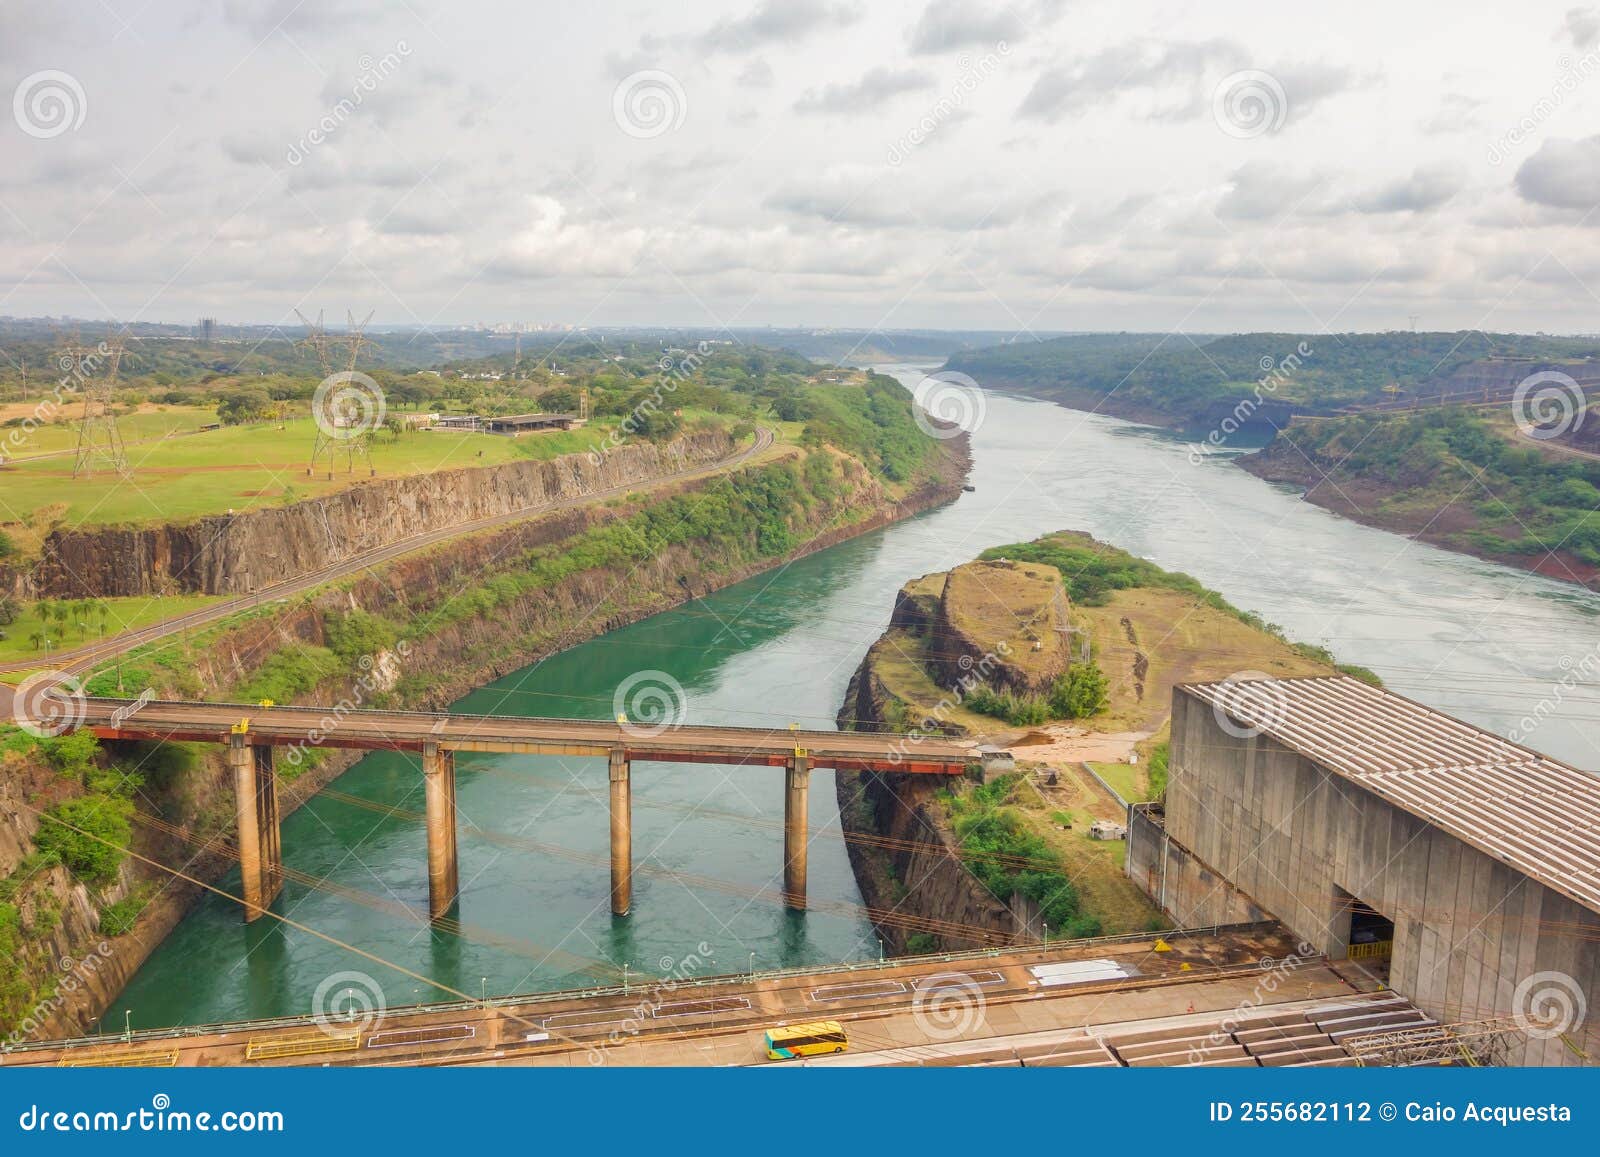 foz do iguacu, brazil: itaipu hydroelectric power plant dam in parana river